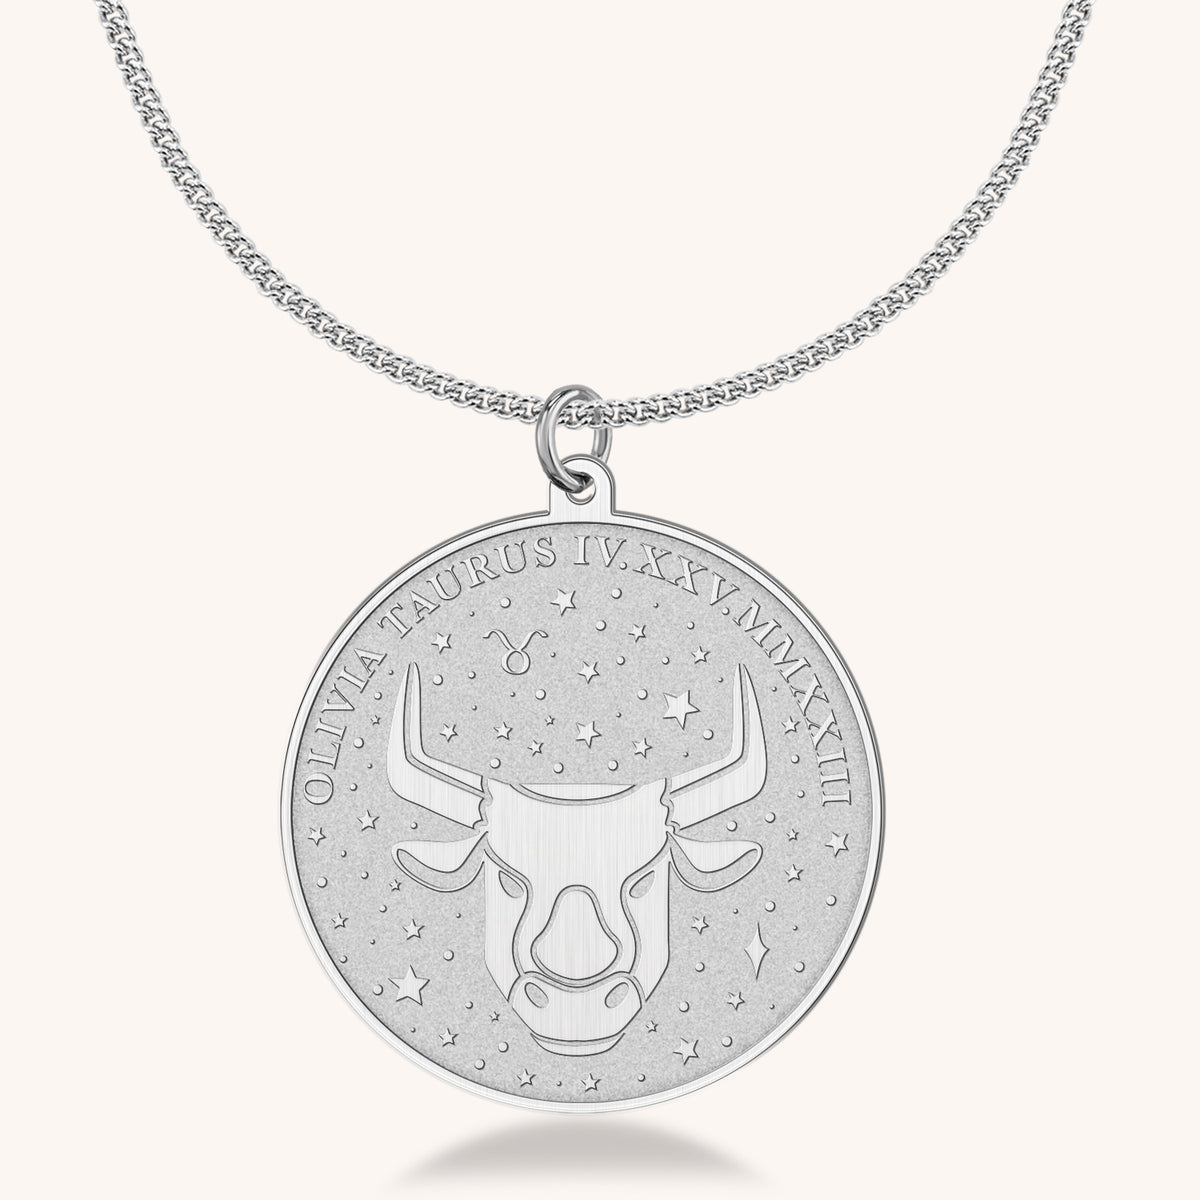 Taurus Zodiac Medallion Necklace